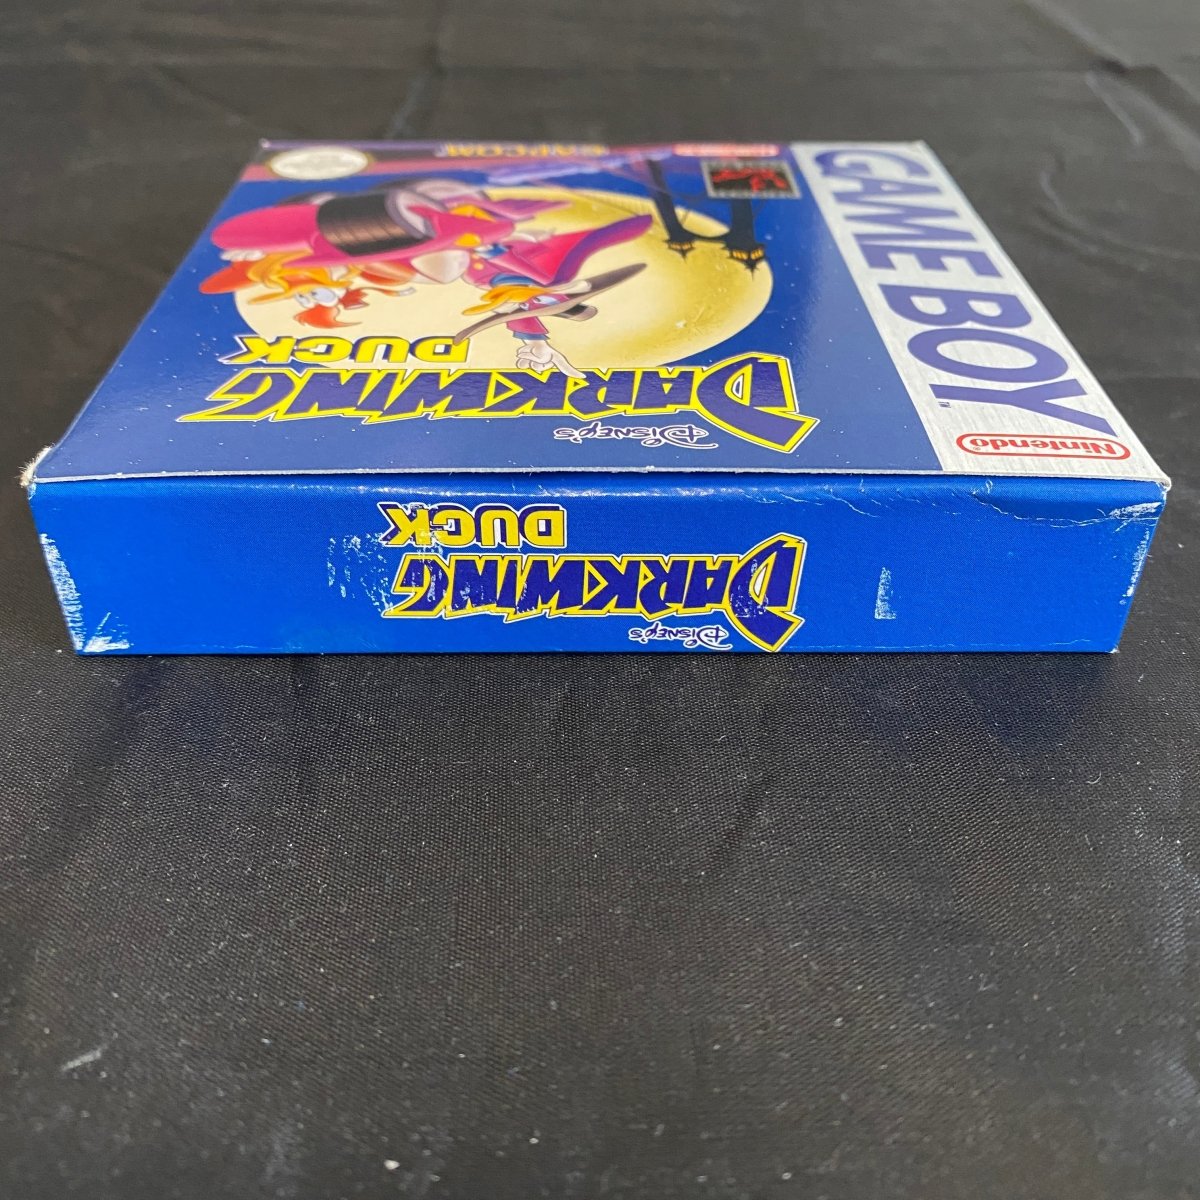 Darkwing duck Nintendo game boy game complete – retro game store